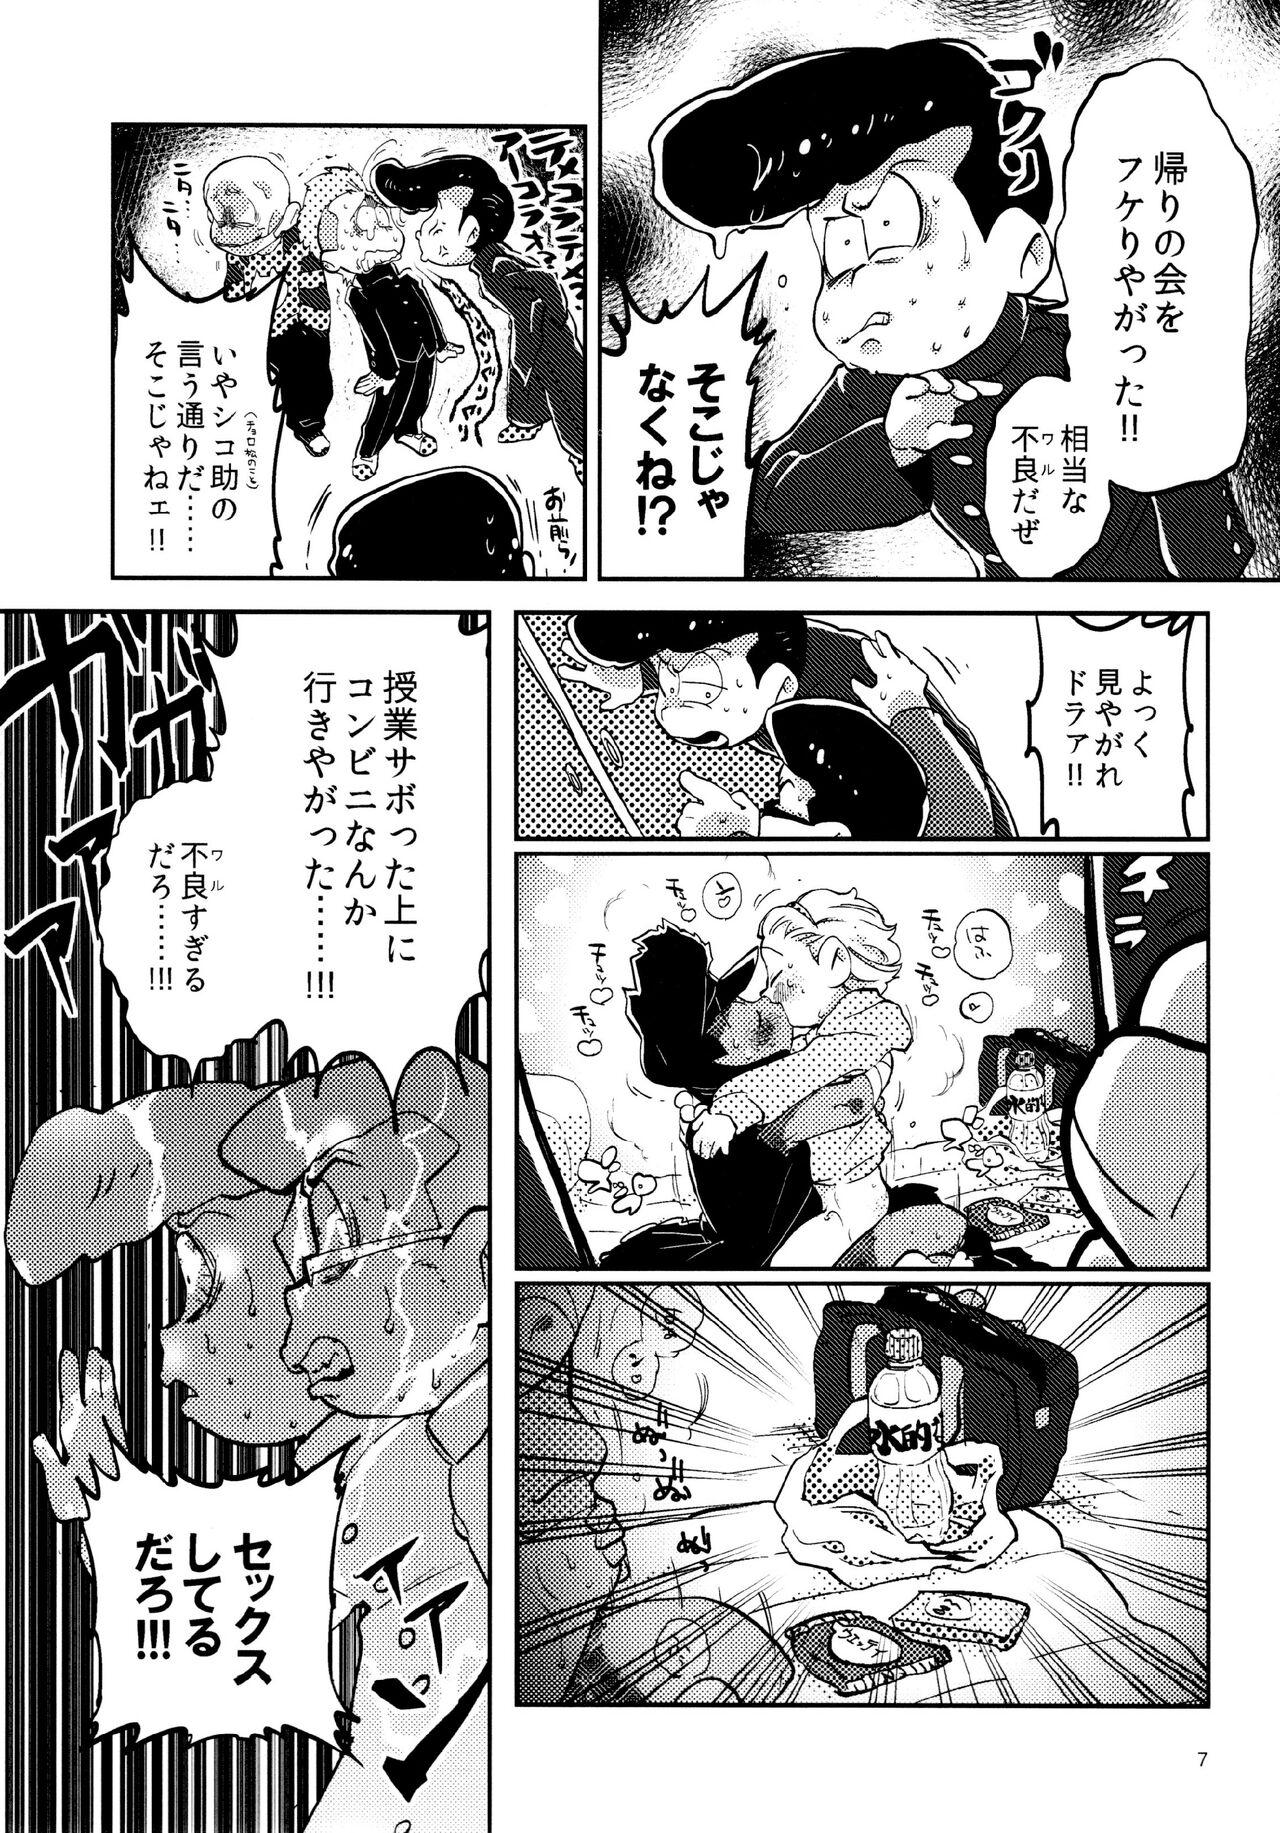 Gay Medical Amaebitamago (gyuunyuu) gaman joutou airabuyuu (Osomatsu-san) - Osomatsu san Parody - Page 7